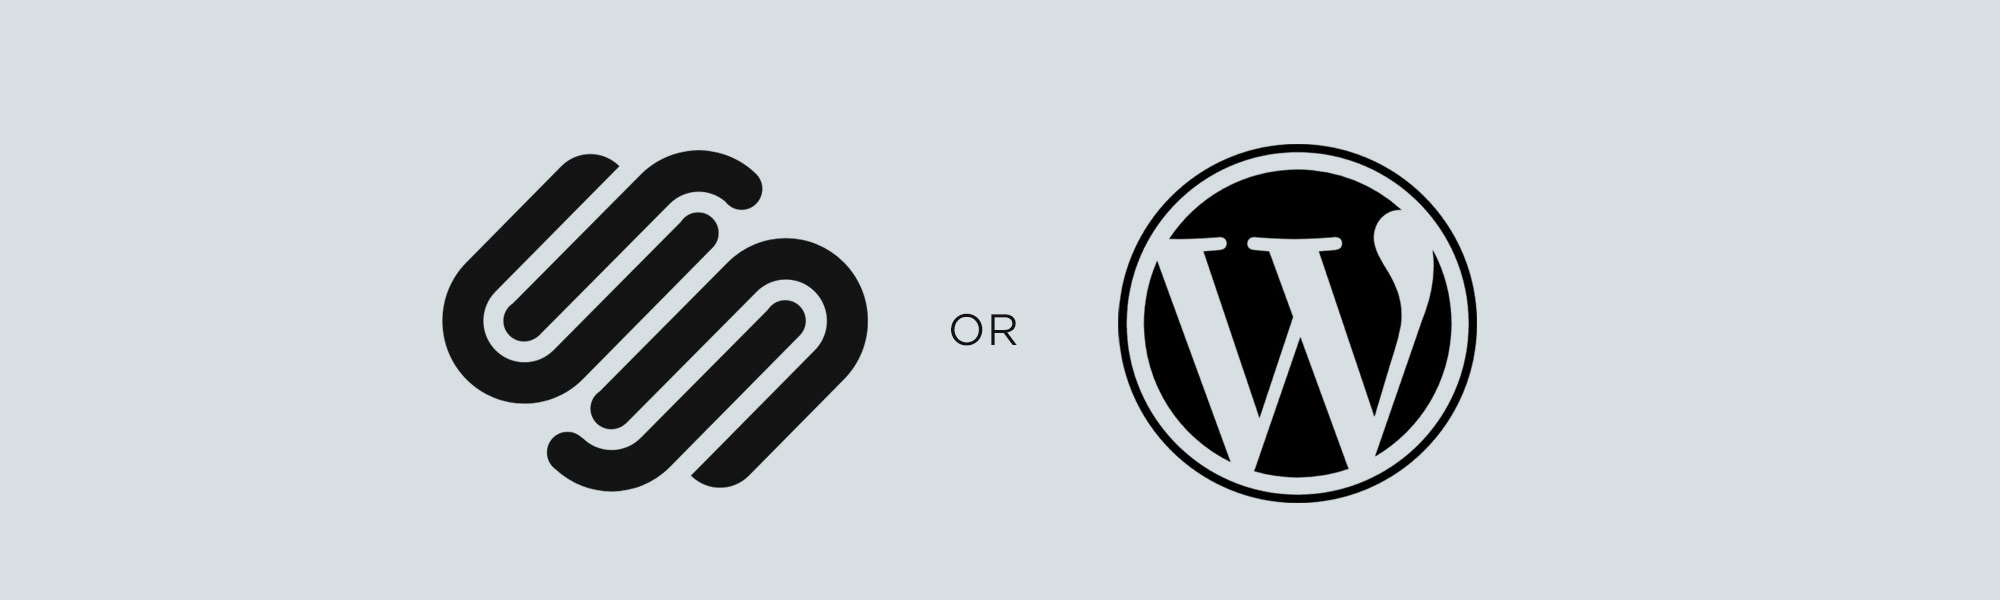  WordPress or SquareSpace